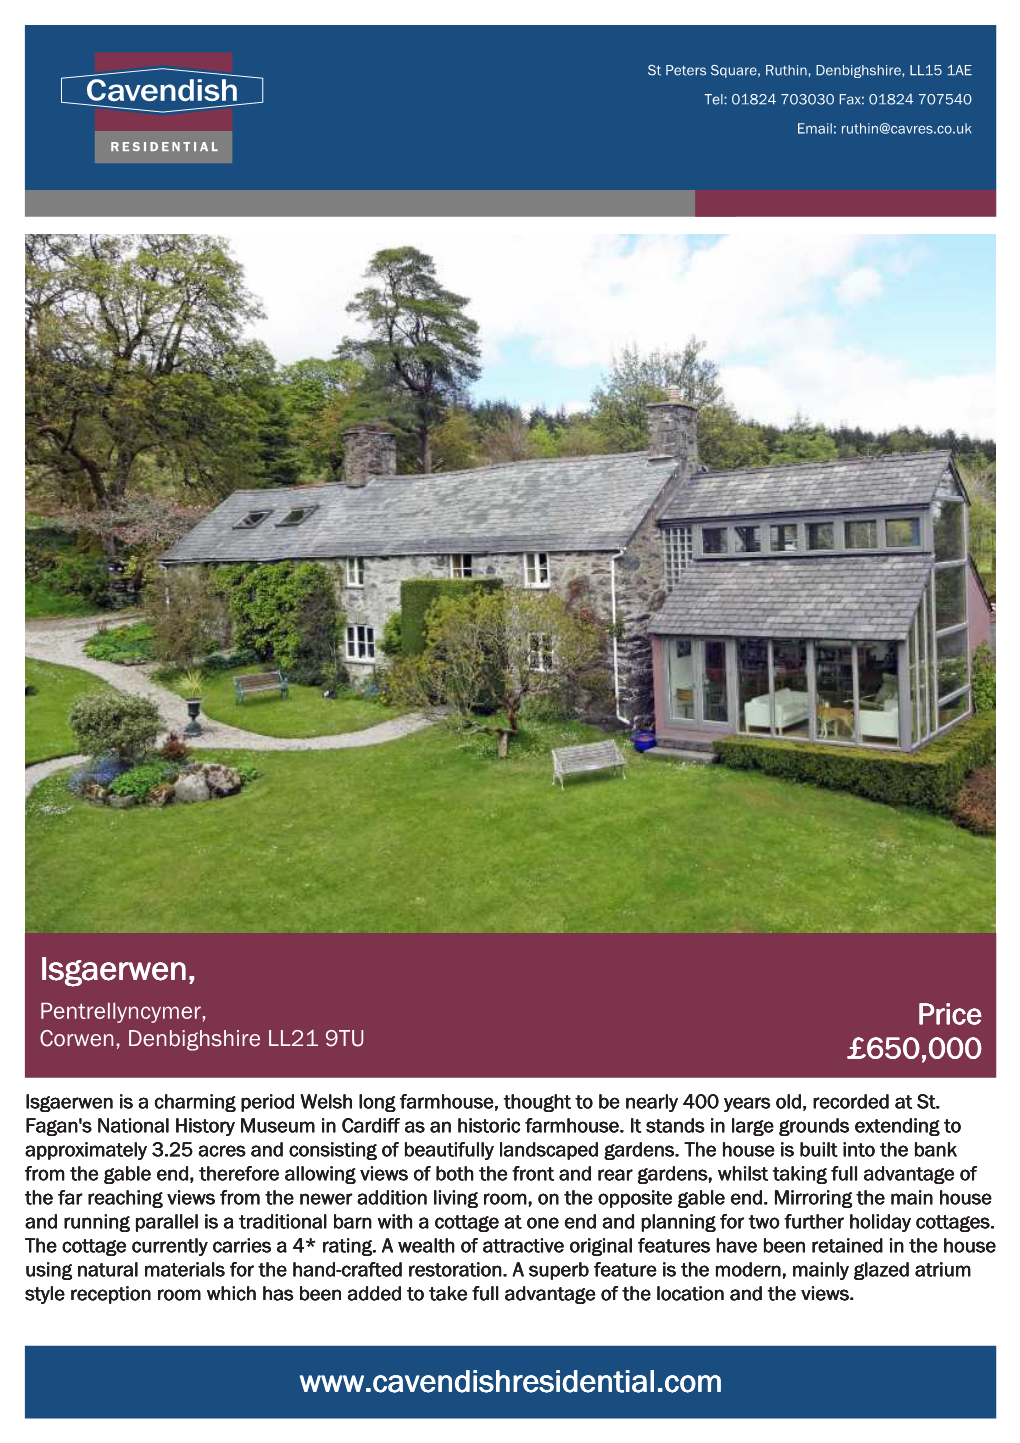 Isgaerwen, Pentrellyncymer, Price Corwen, Denbighshire LL21 9TU £650,000